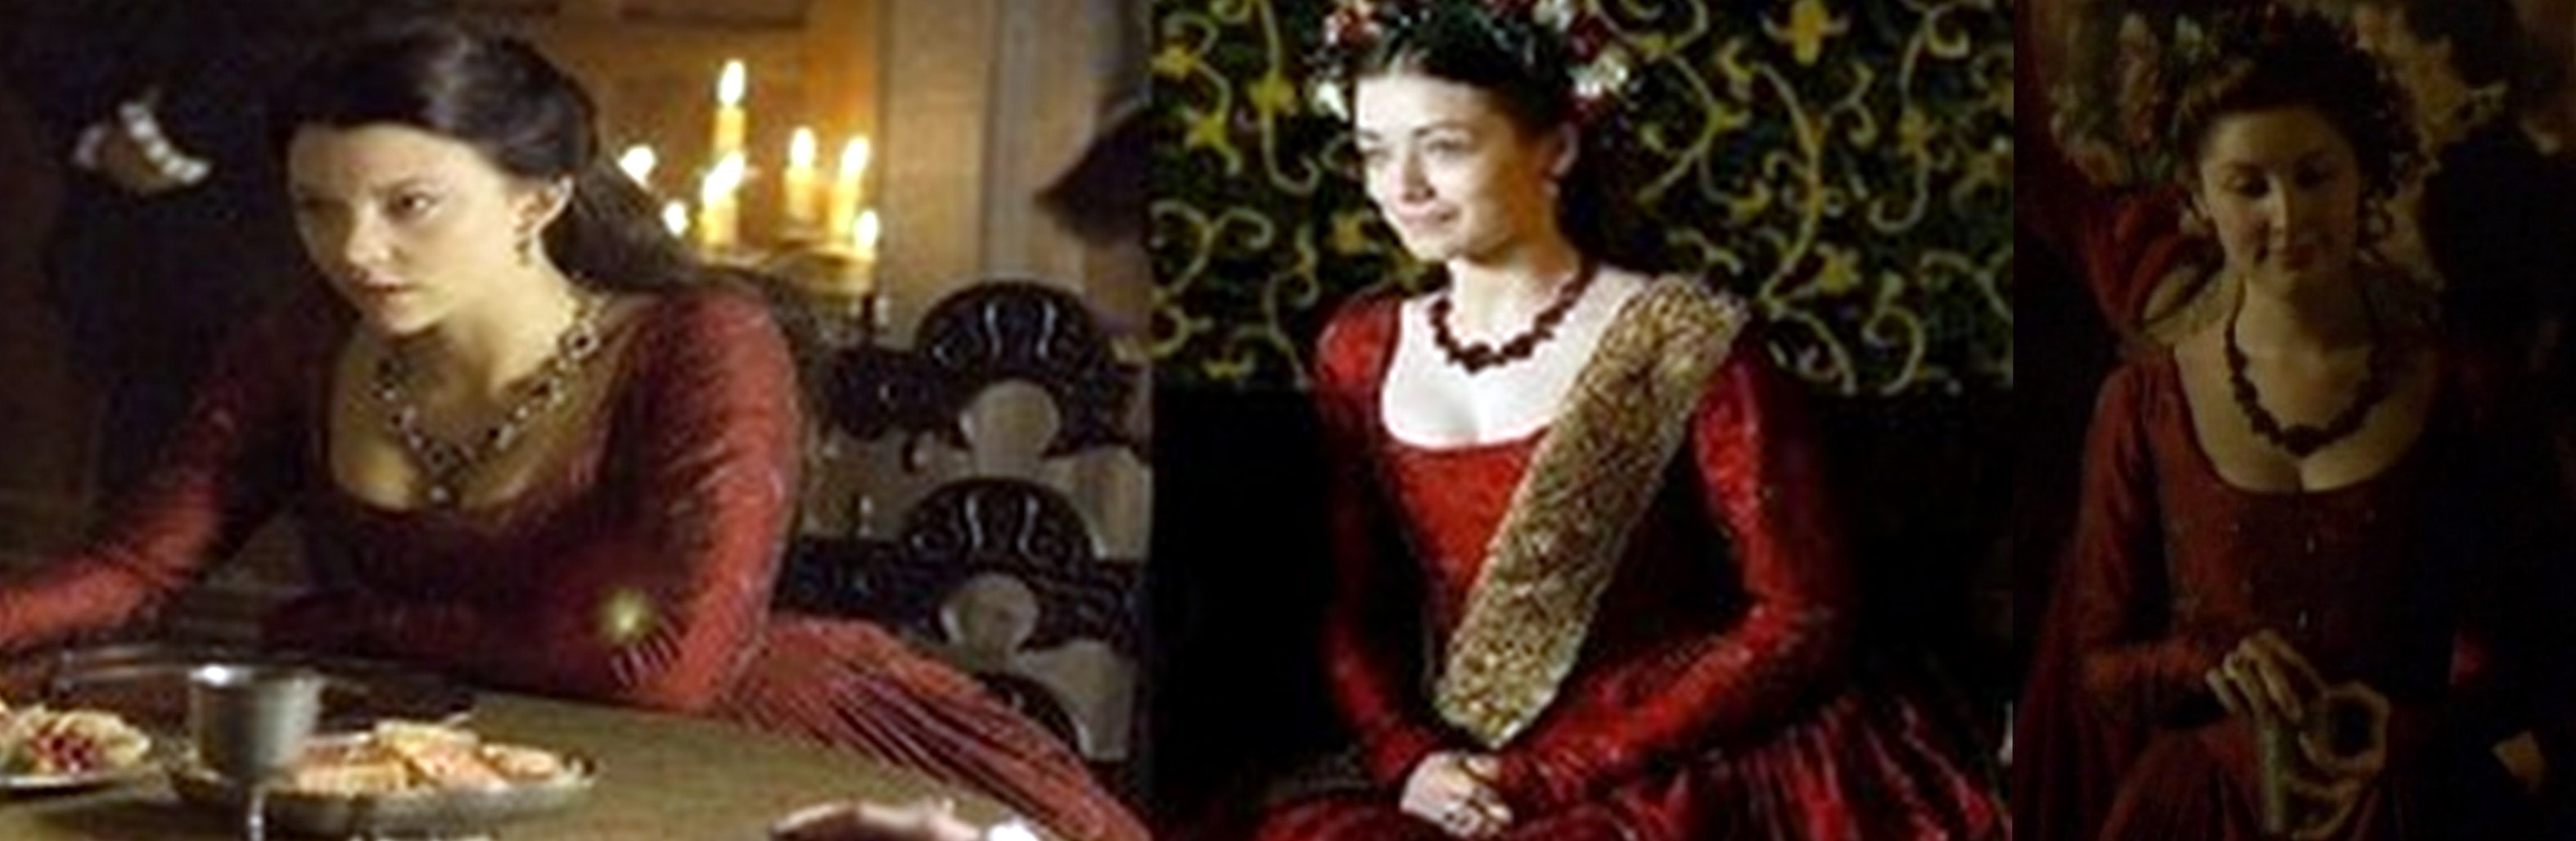 Anne Boleyn/Princess Mary/Anne Stanhope - Dress